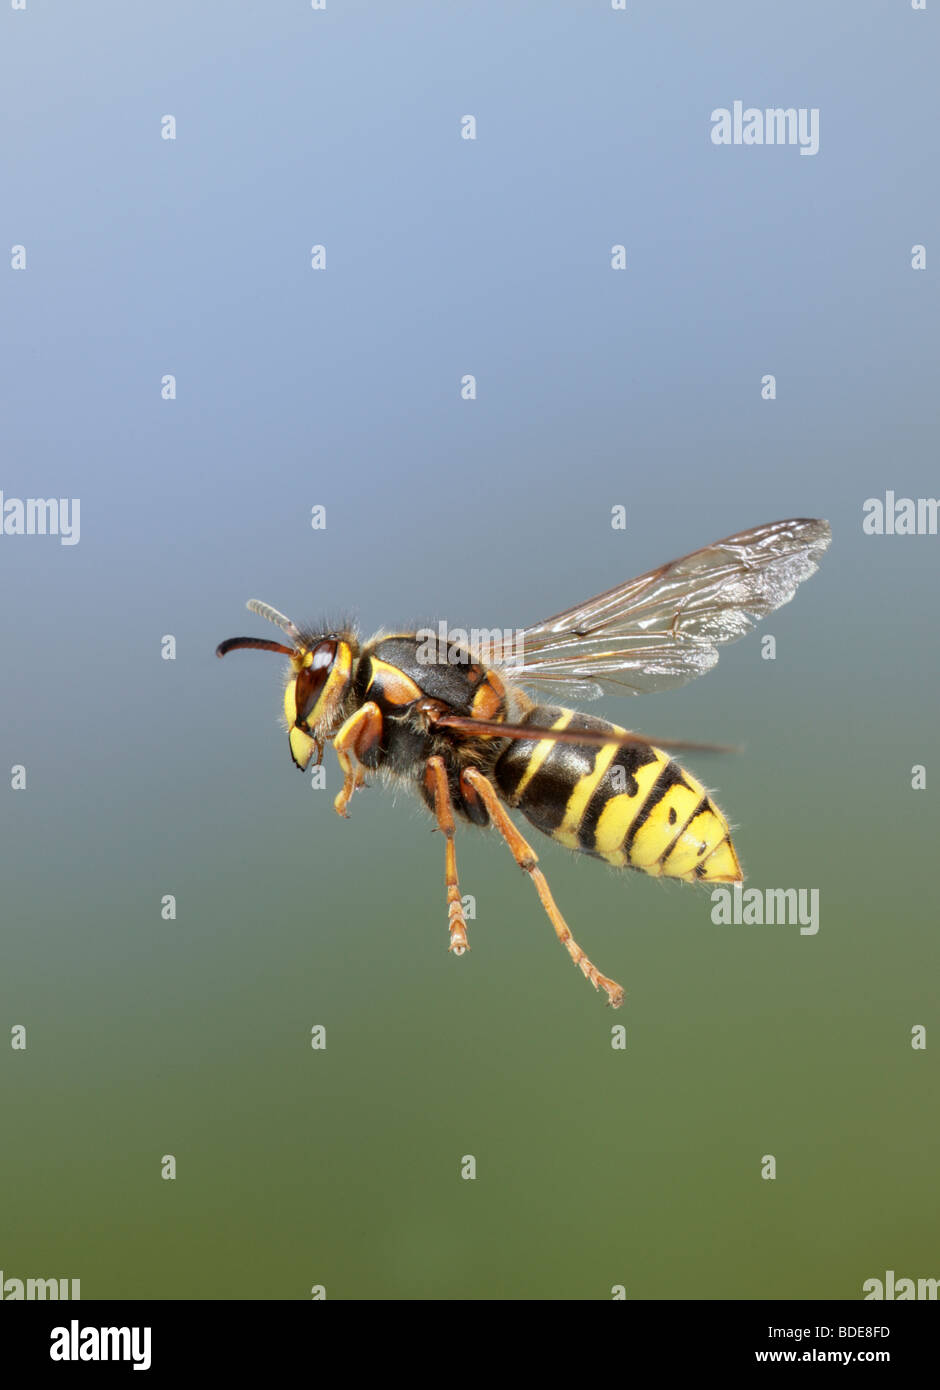 Wasps in flight Stock Photo